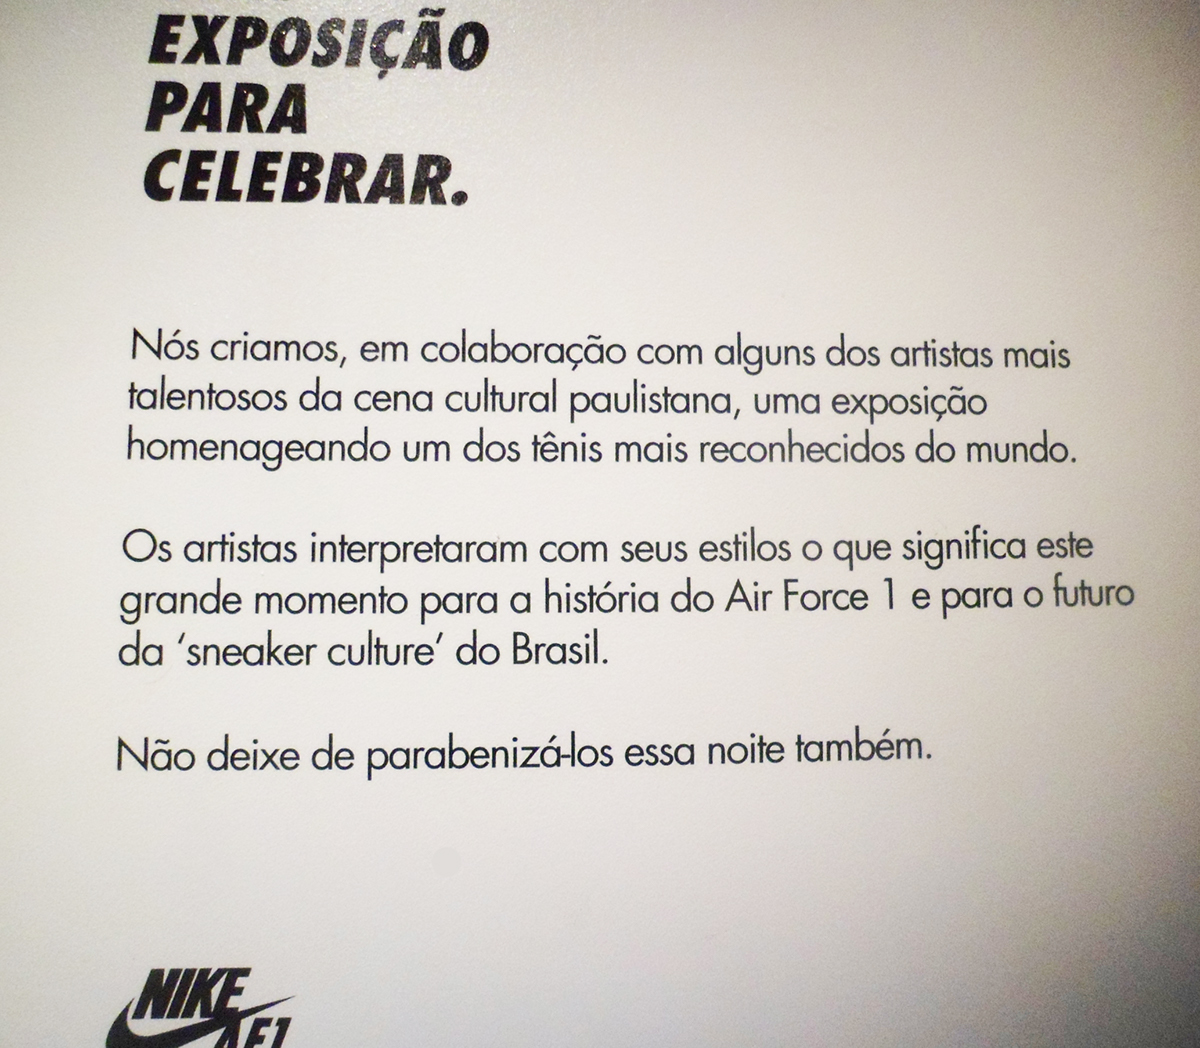 Nike Ilustração af1 expo disco black gold